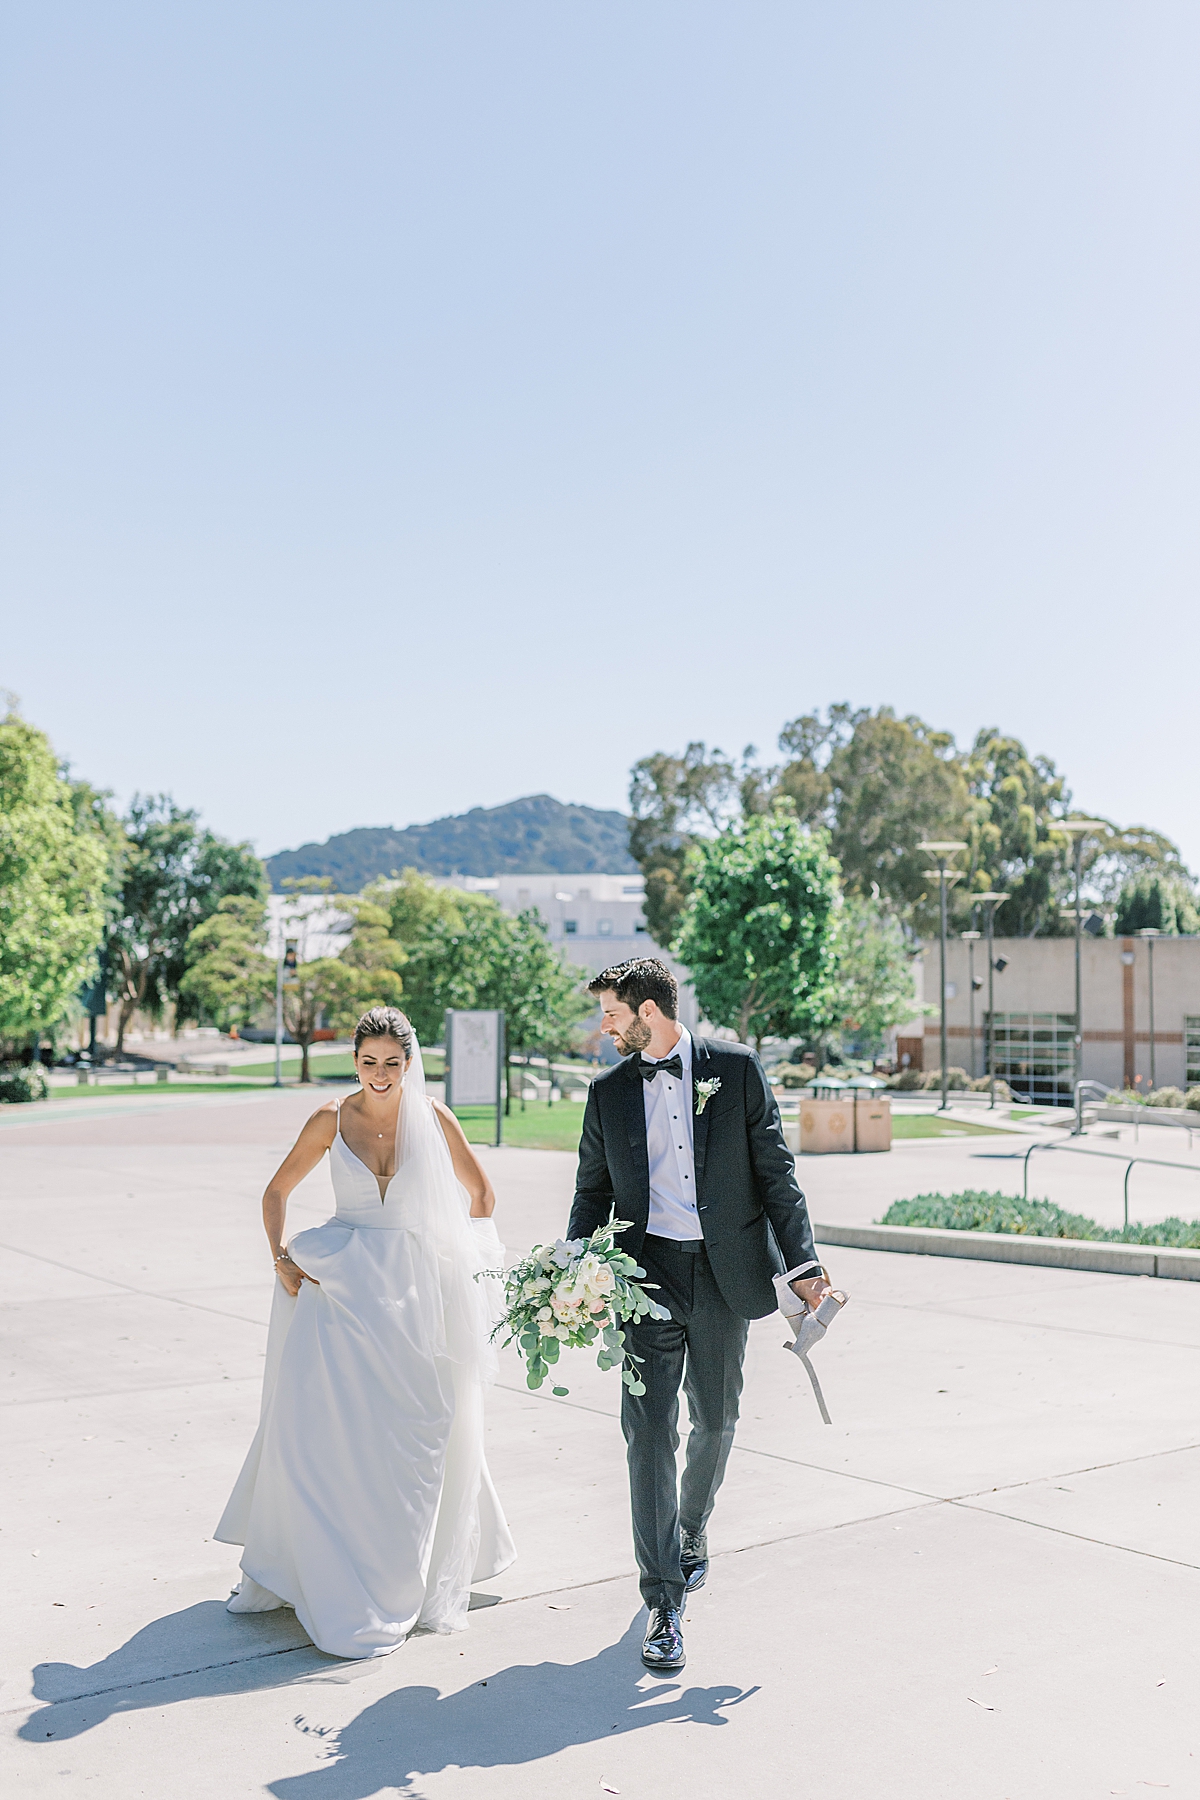 The newlyweds walking through their old college campus in their wedding attire on their San Luis Obispo Mission wedding day.